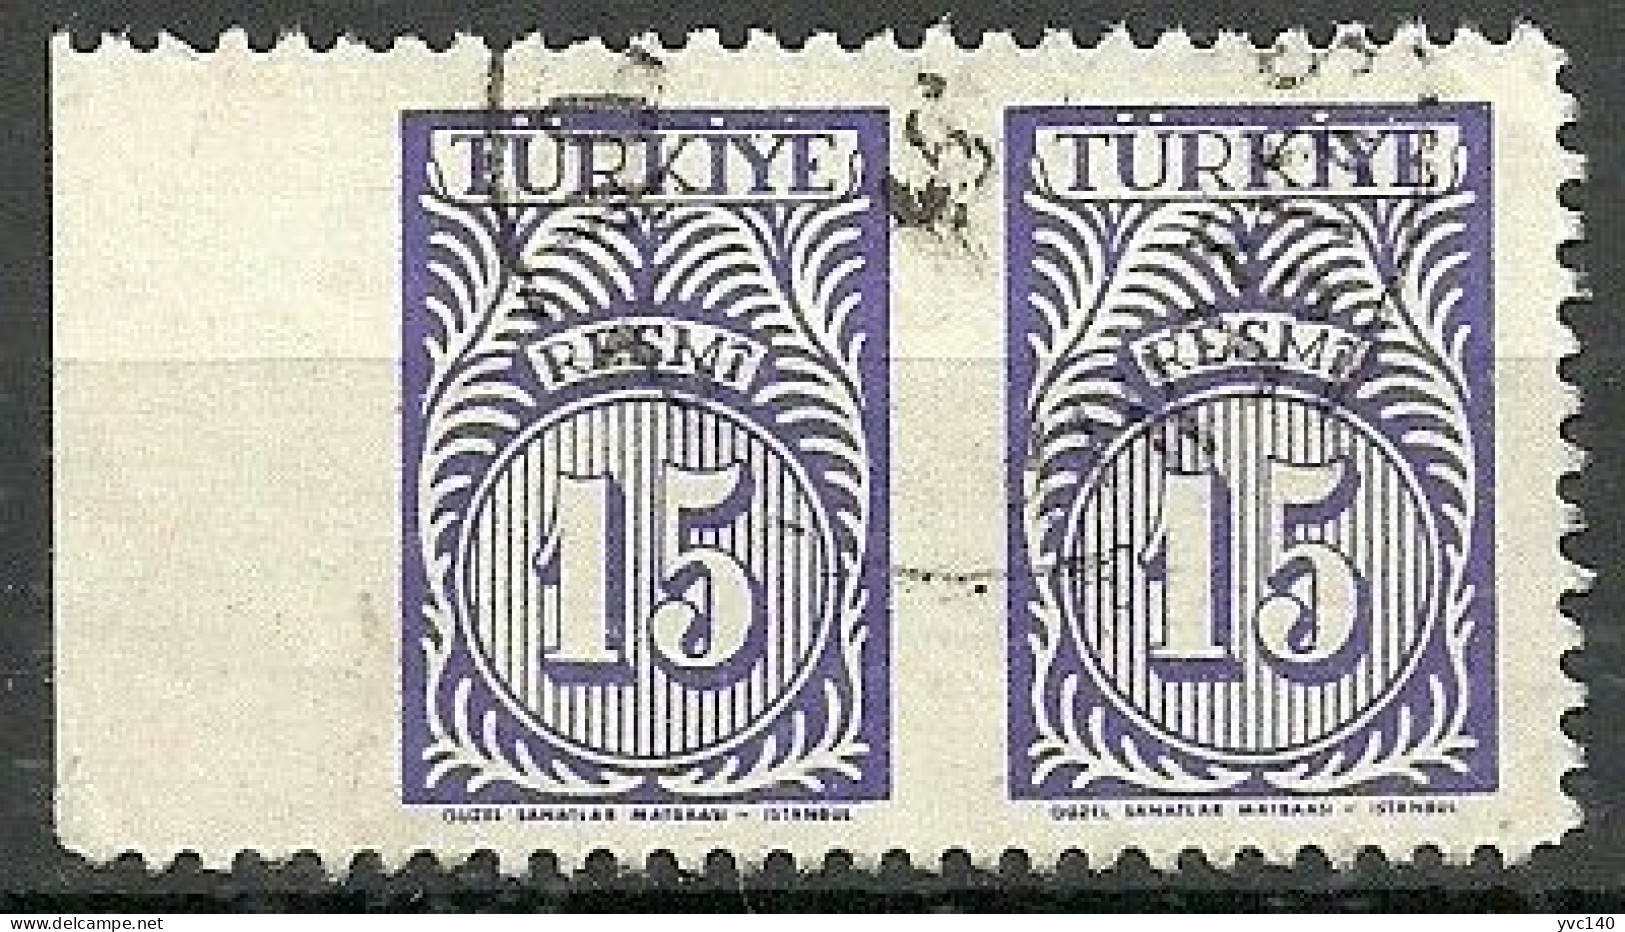 Turkey; 1957 Official Stamp 15 K. ERROR "Partially Imperf." - Francobolli Di Servizio